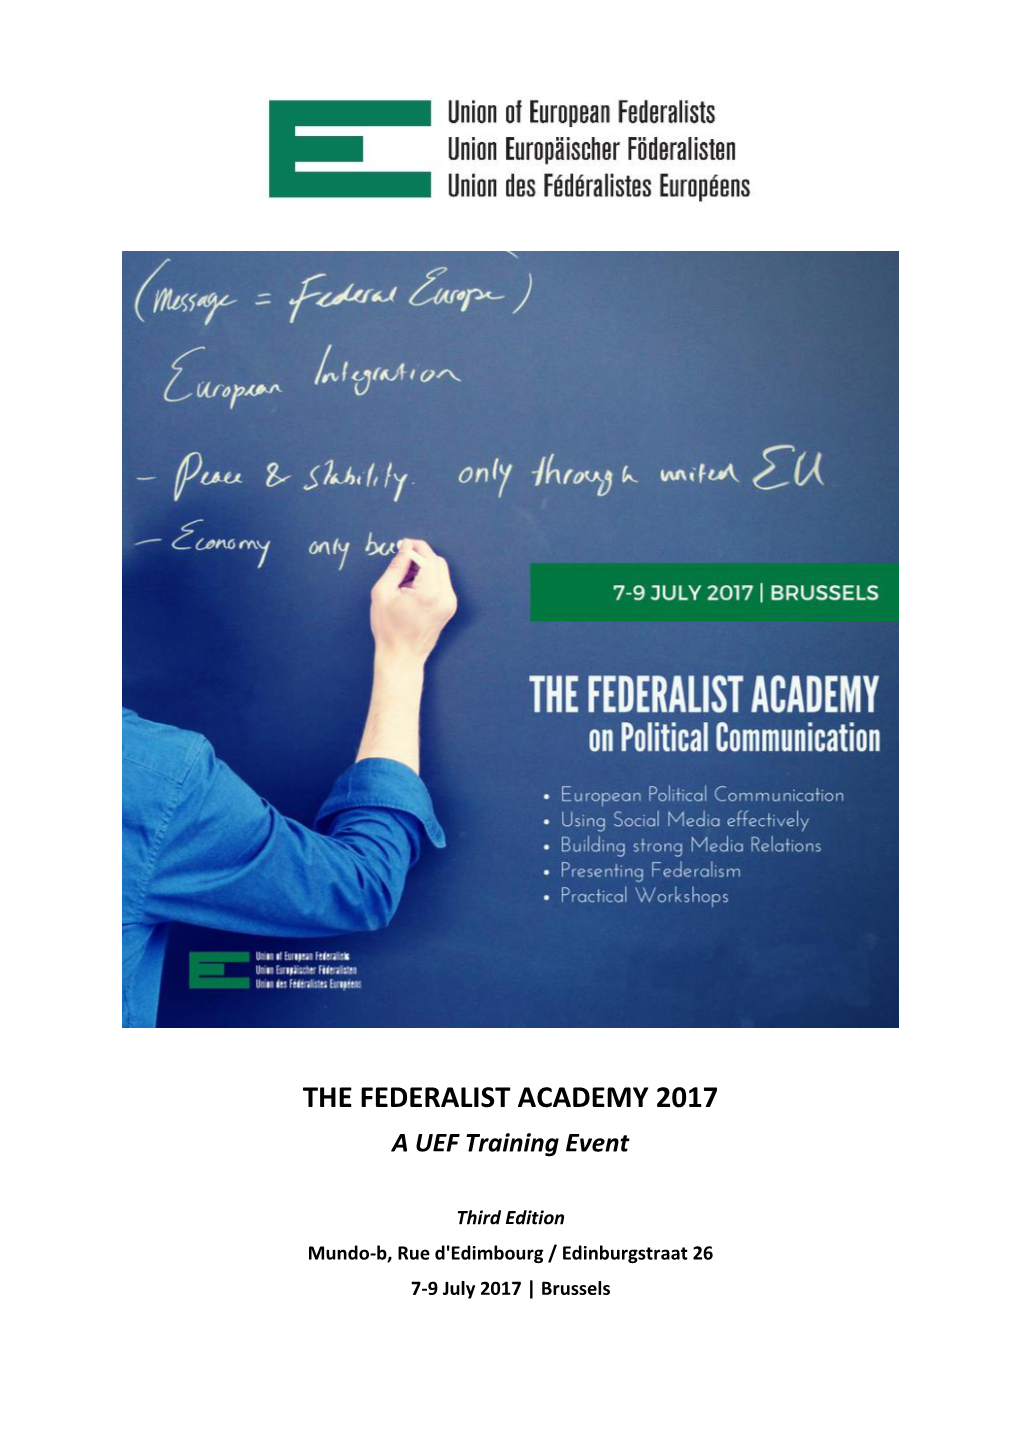 THE FEDERALIST ACADEMY 2017 a UEF Training Event